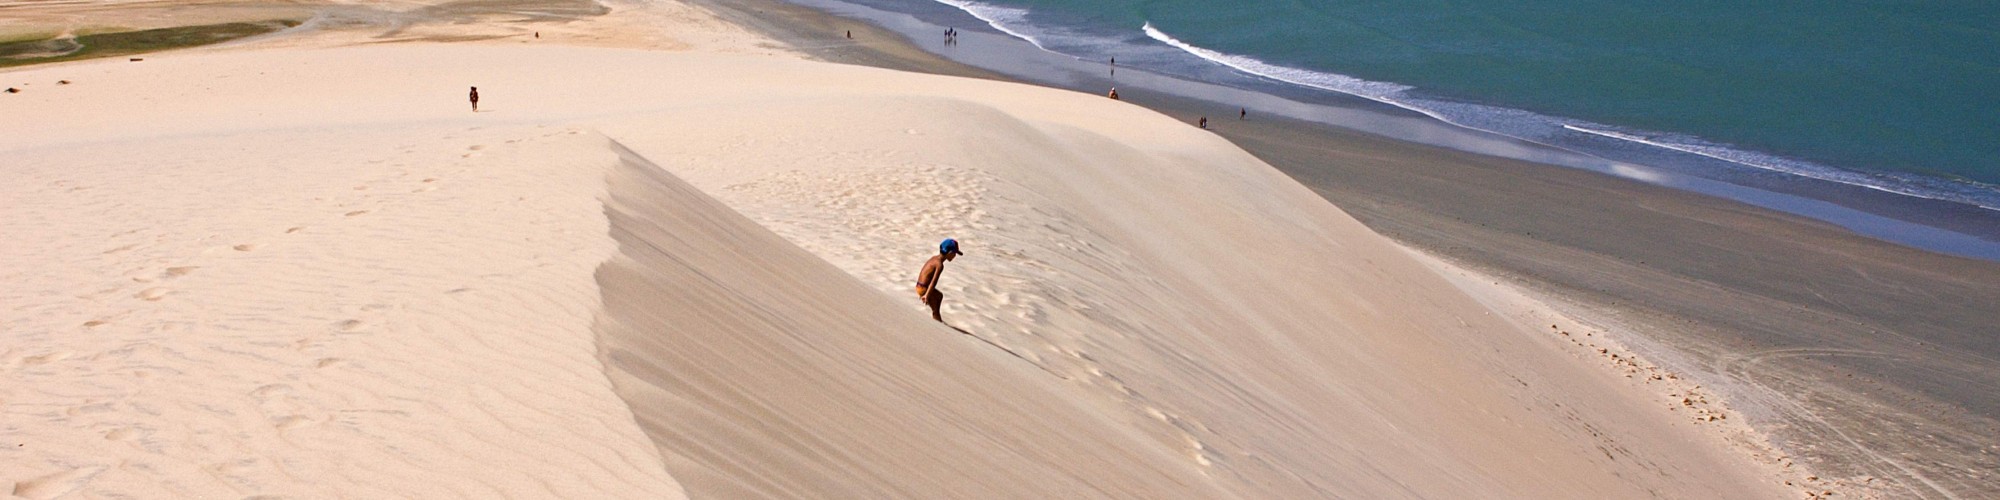 Jericoacoara dunes, Brazil